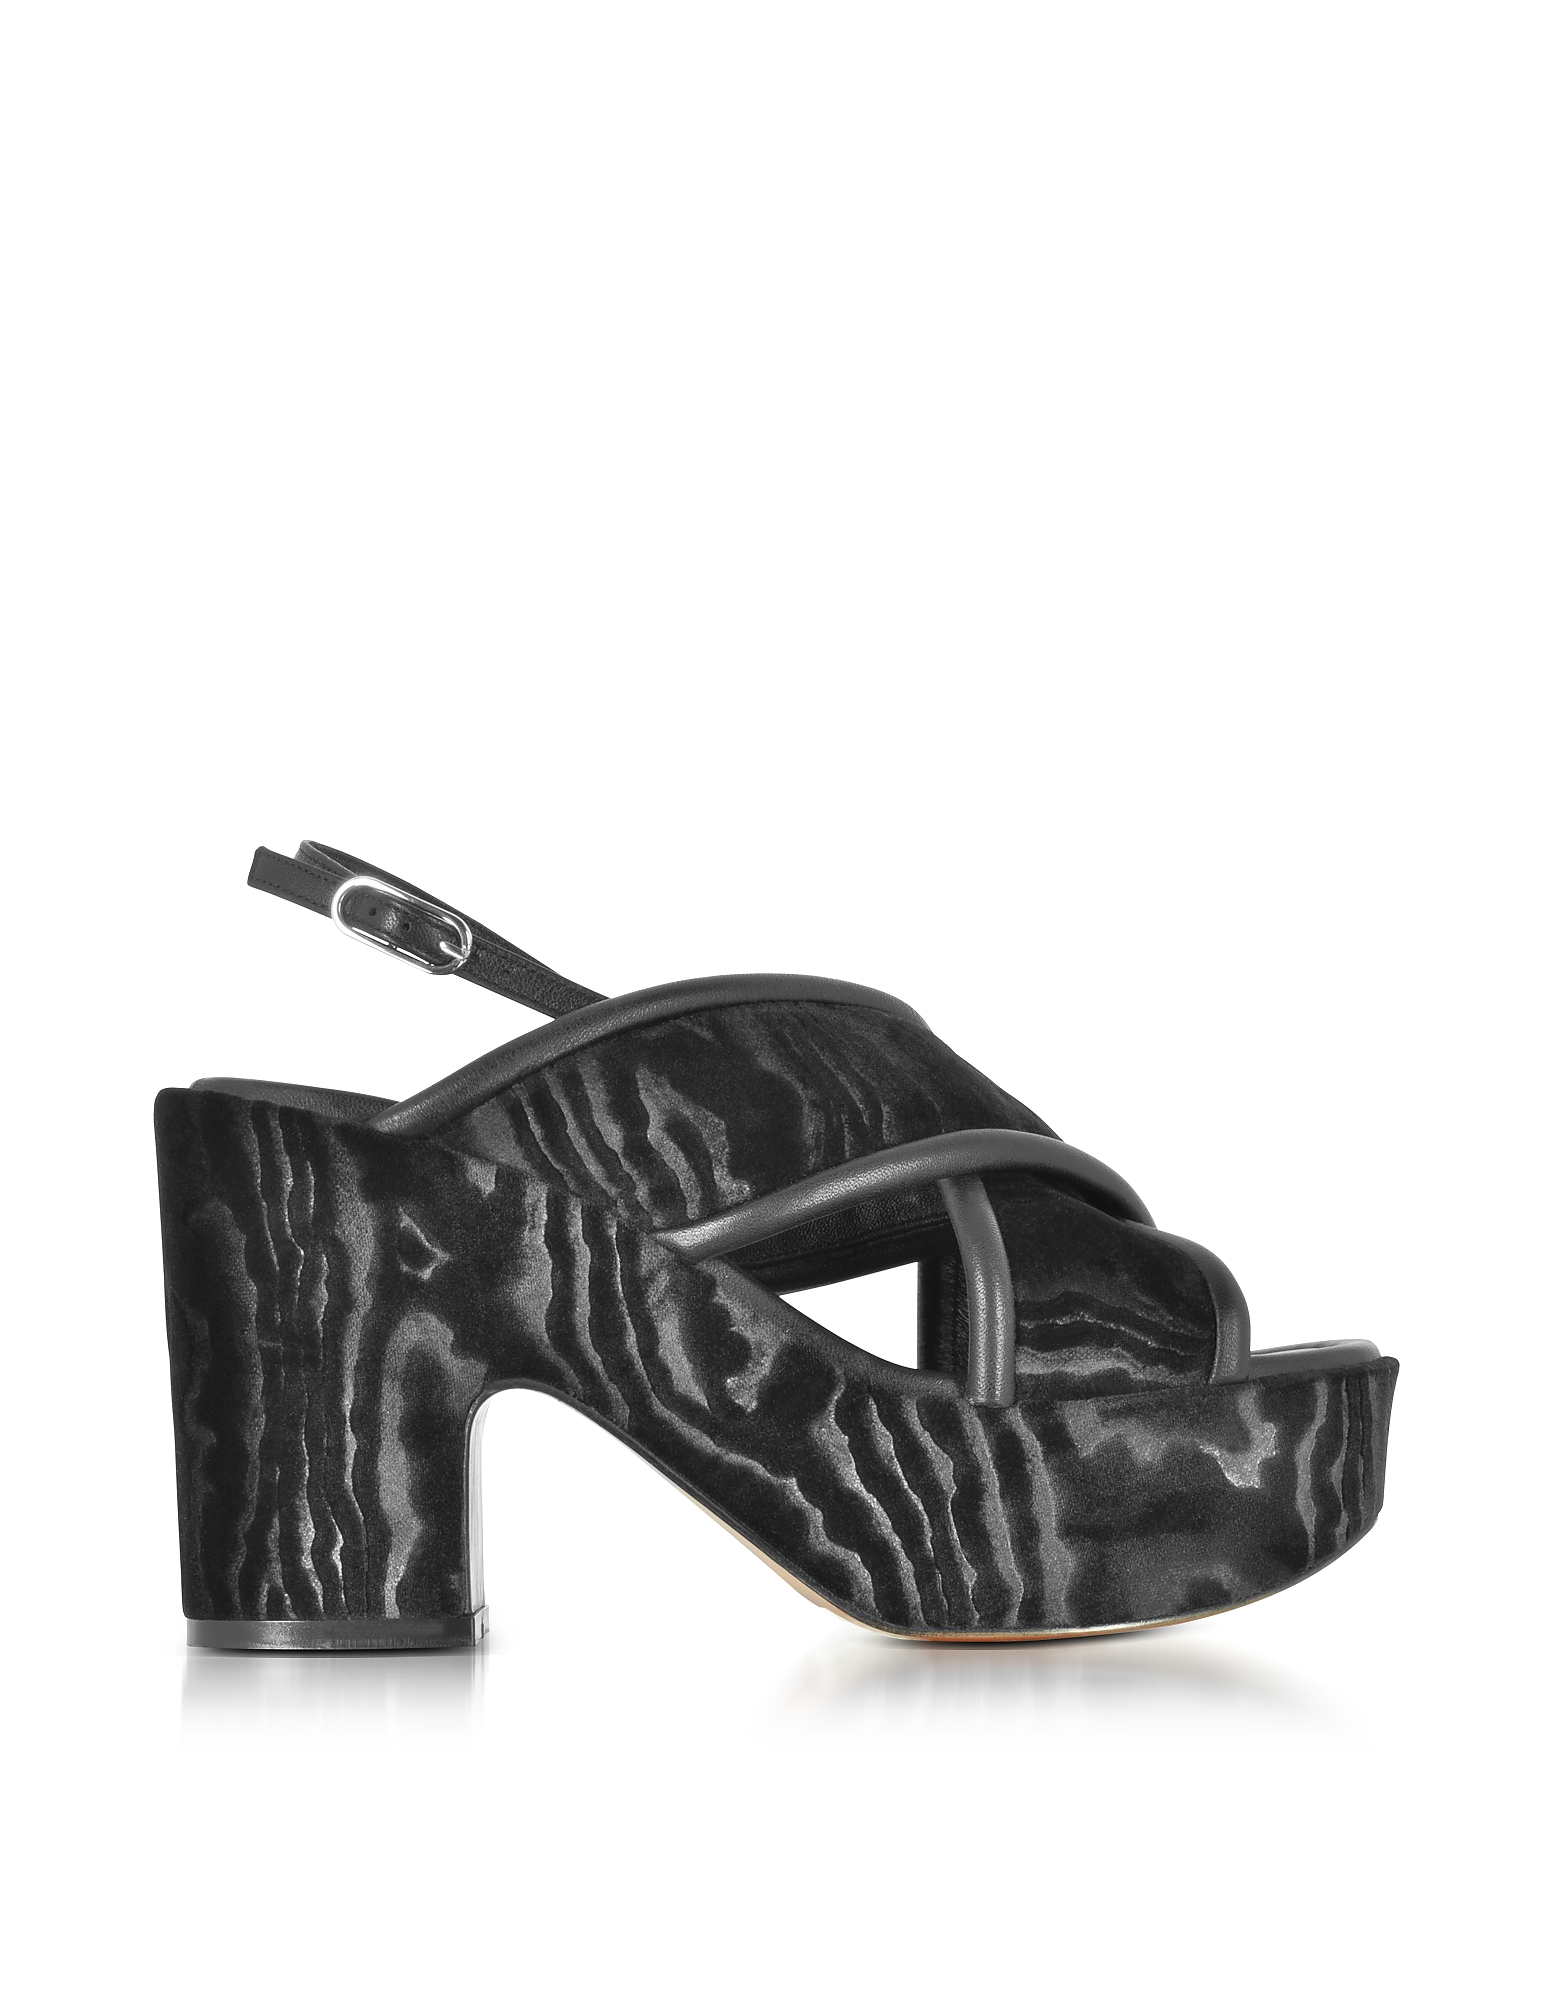 suspension Mold Circular Shop Now For The Robert Clergerie Shoes Emelinet Black Velvet Wedge Sandals  | AccuWeather Shop